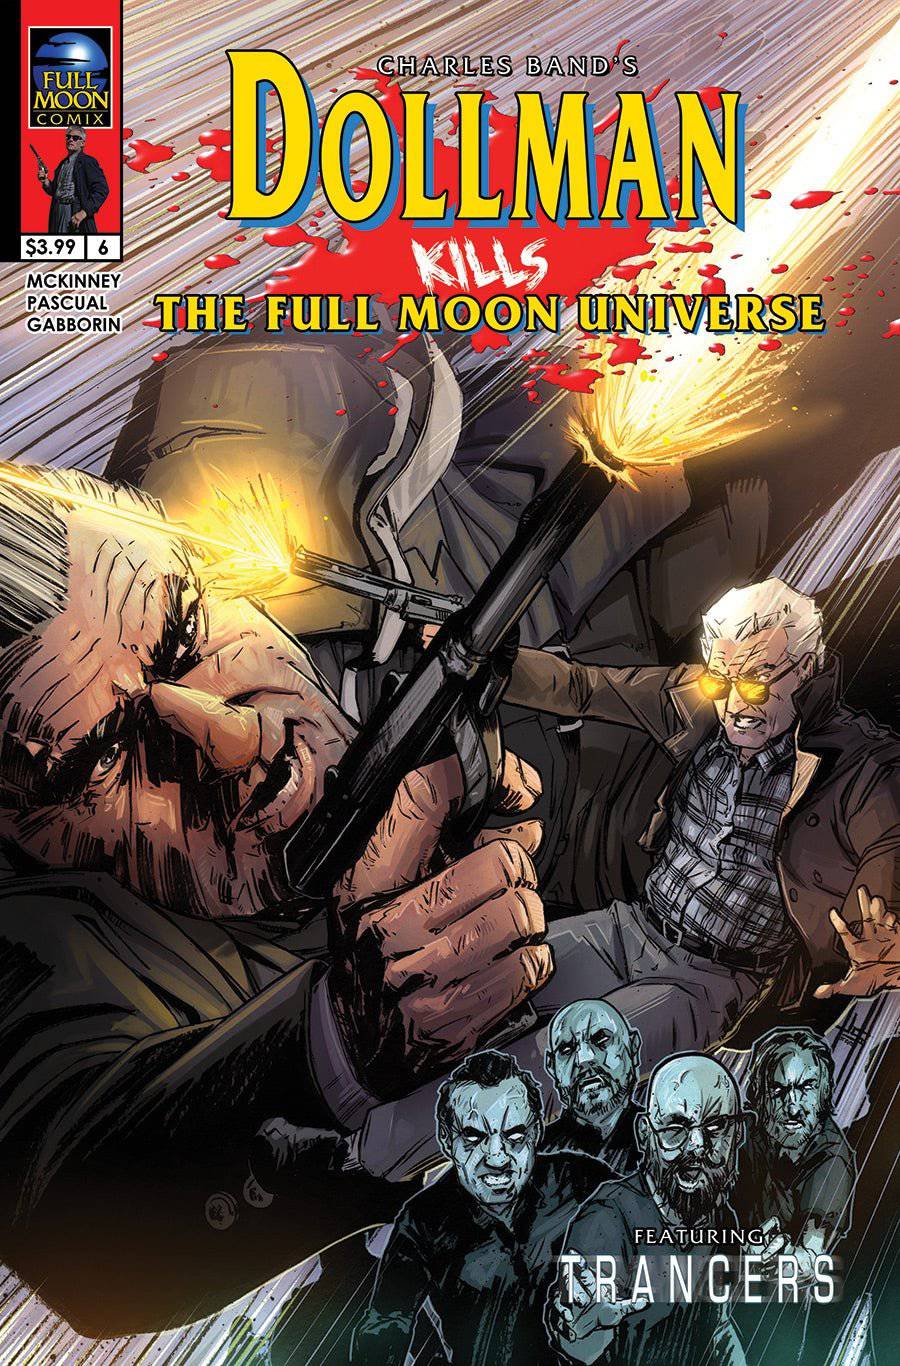 Dollman Kills The Full Moon Universe #6 (Jason Strutz cover)